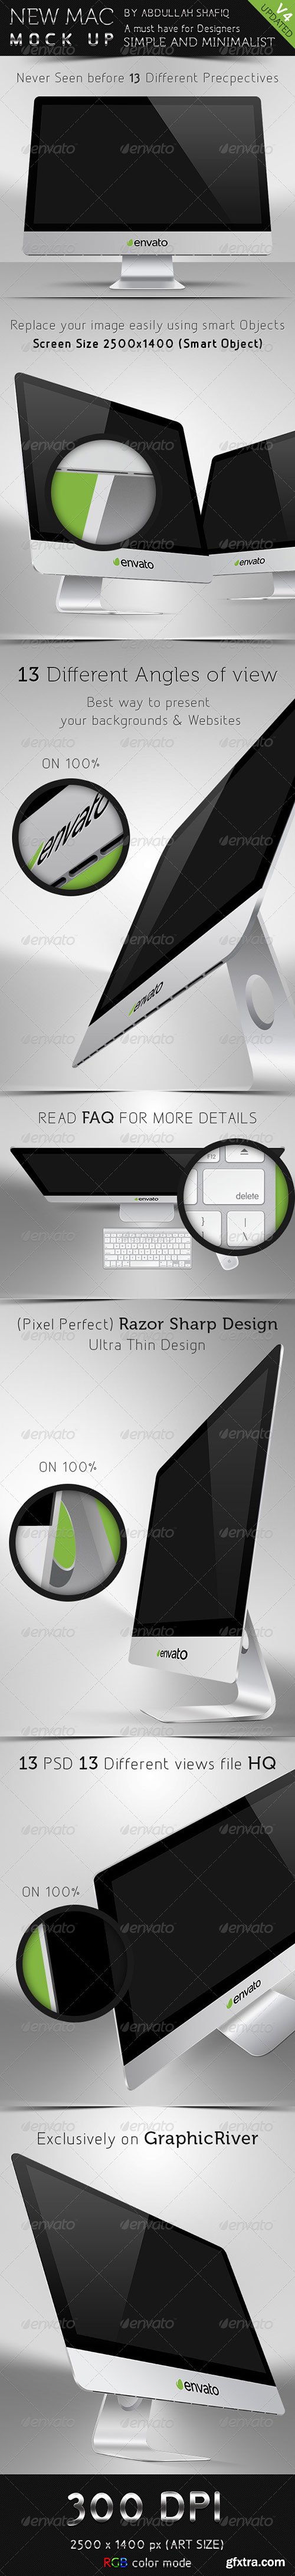 GraphicRiver - New Mac Mockup 3719363